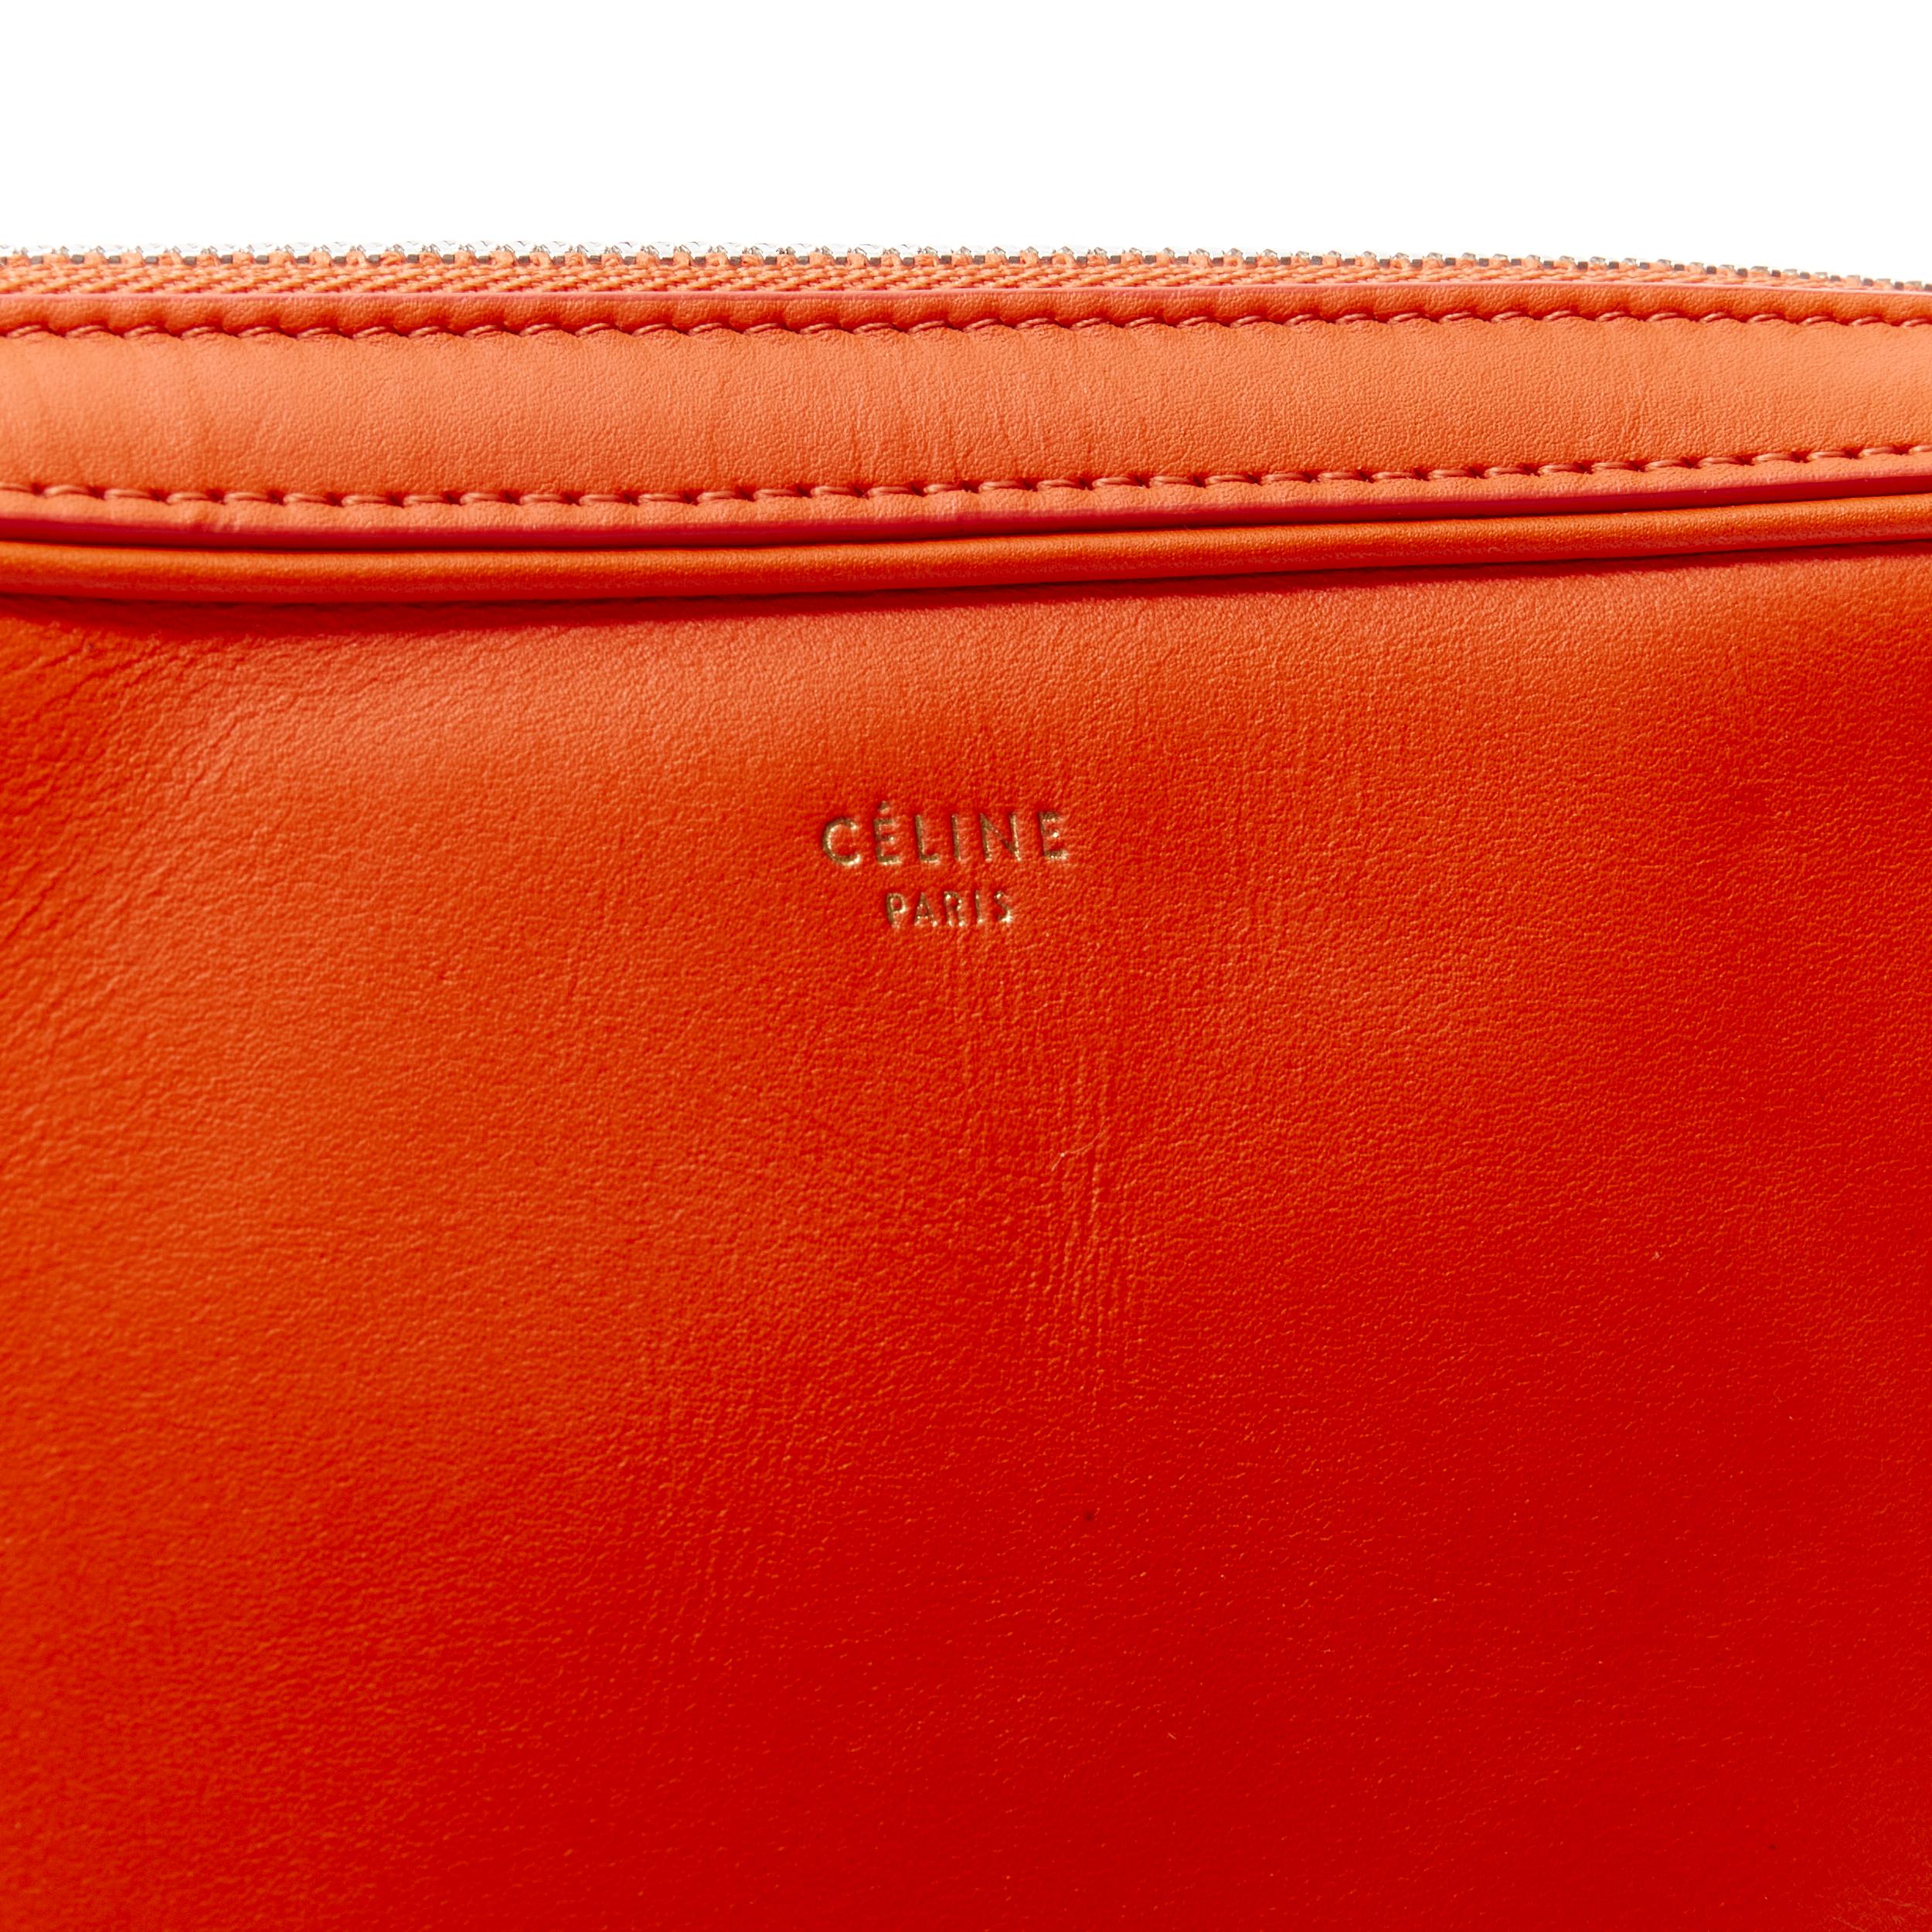 OLD CELINE Phoebe Philo orange leather silver lock Dragonne leather pouch clutch 1